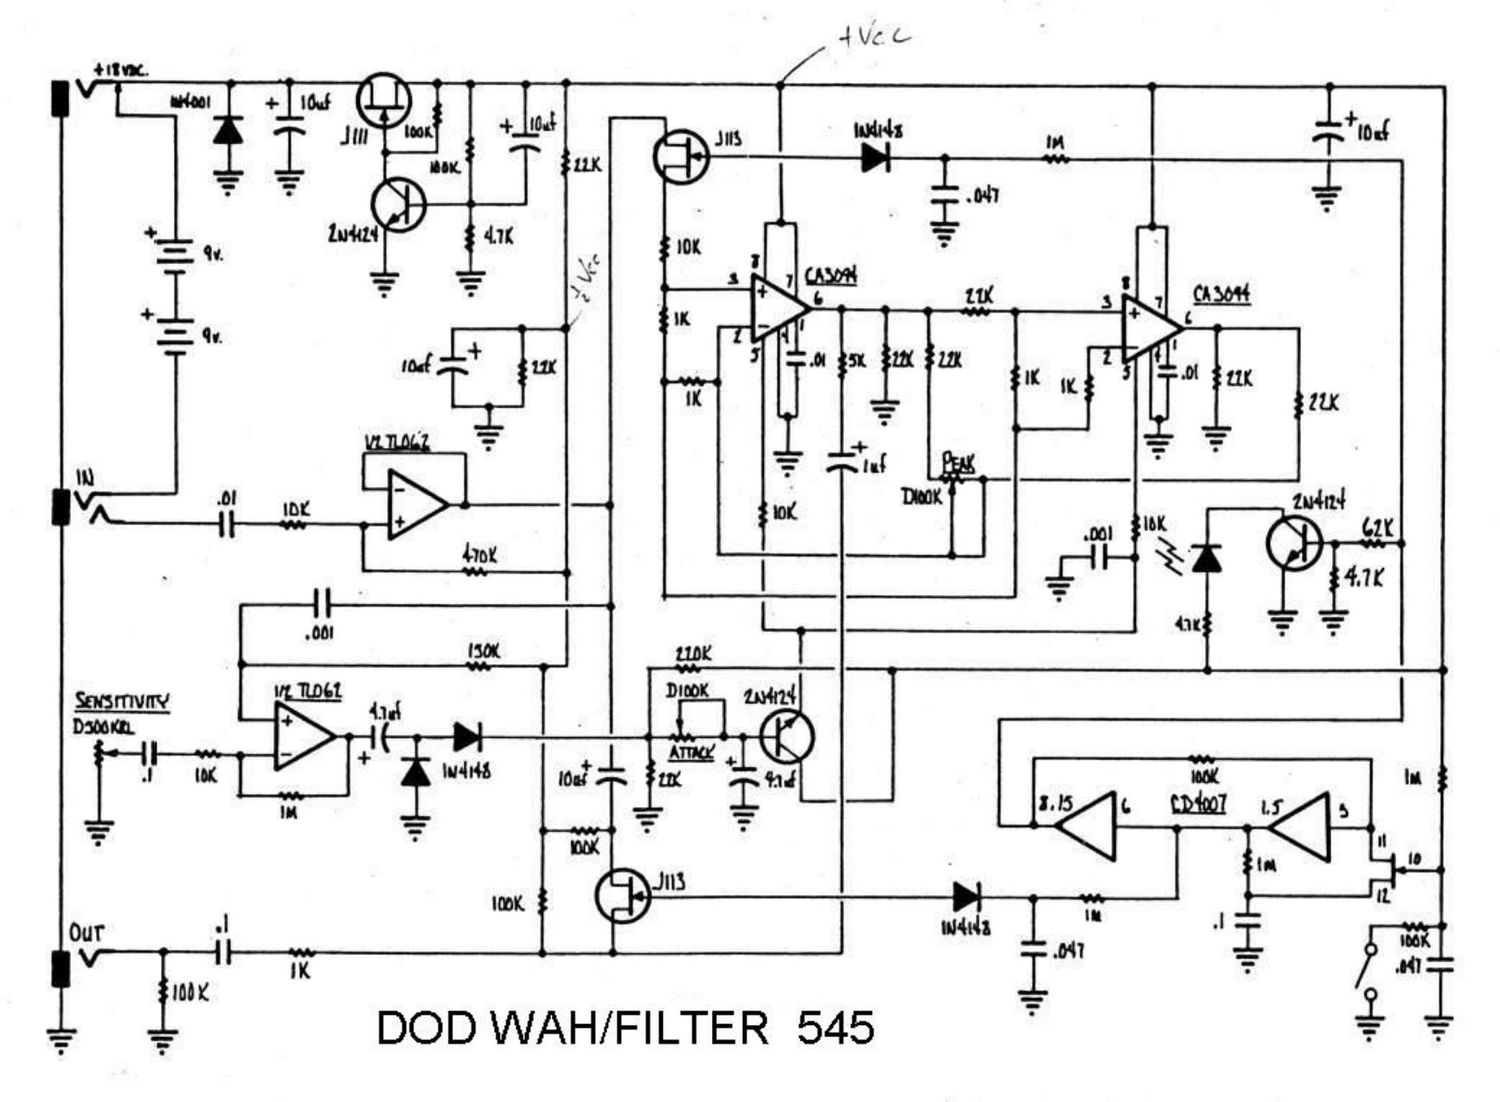 dod 545 wah filter schematic